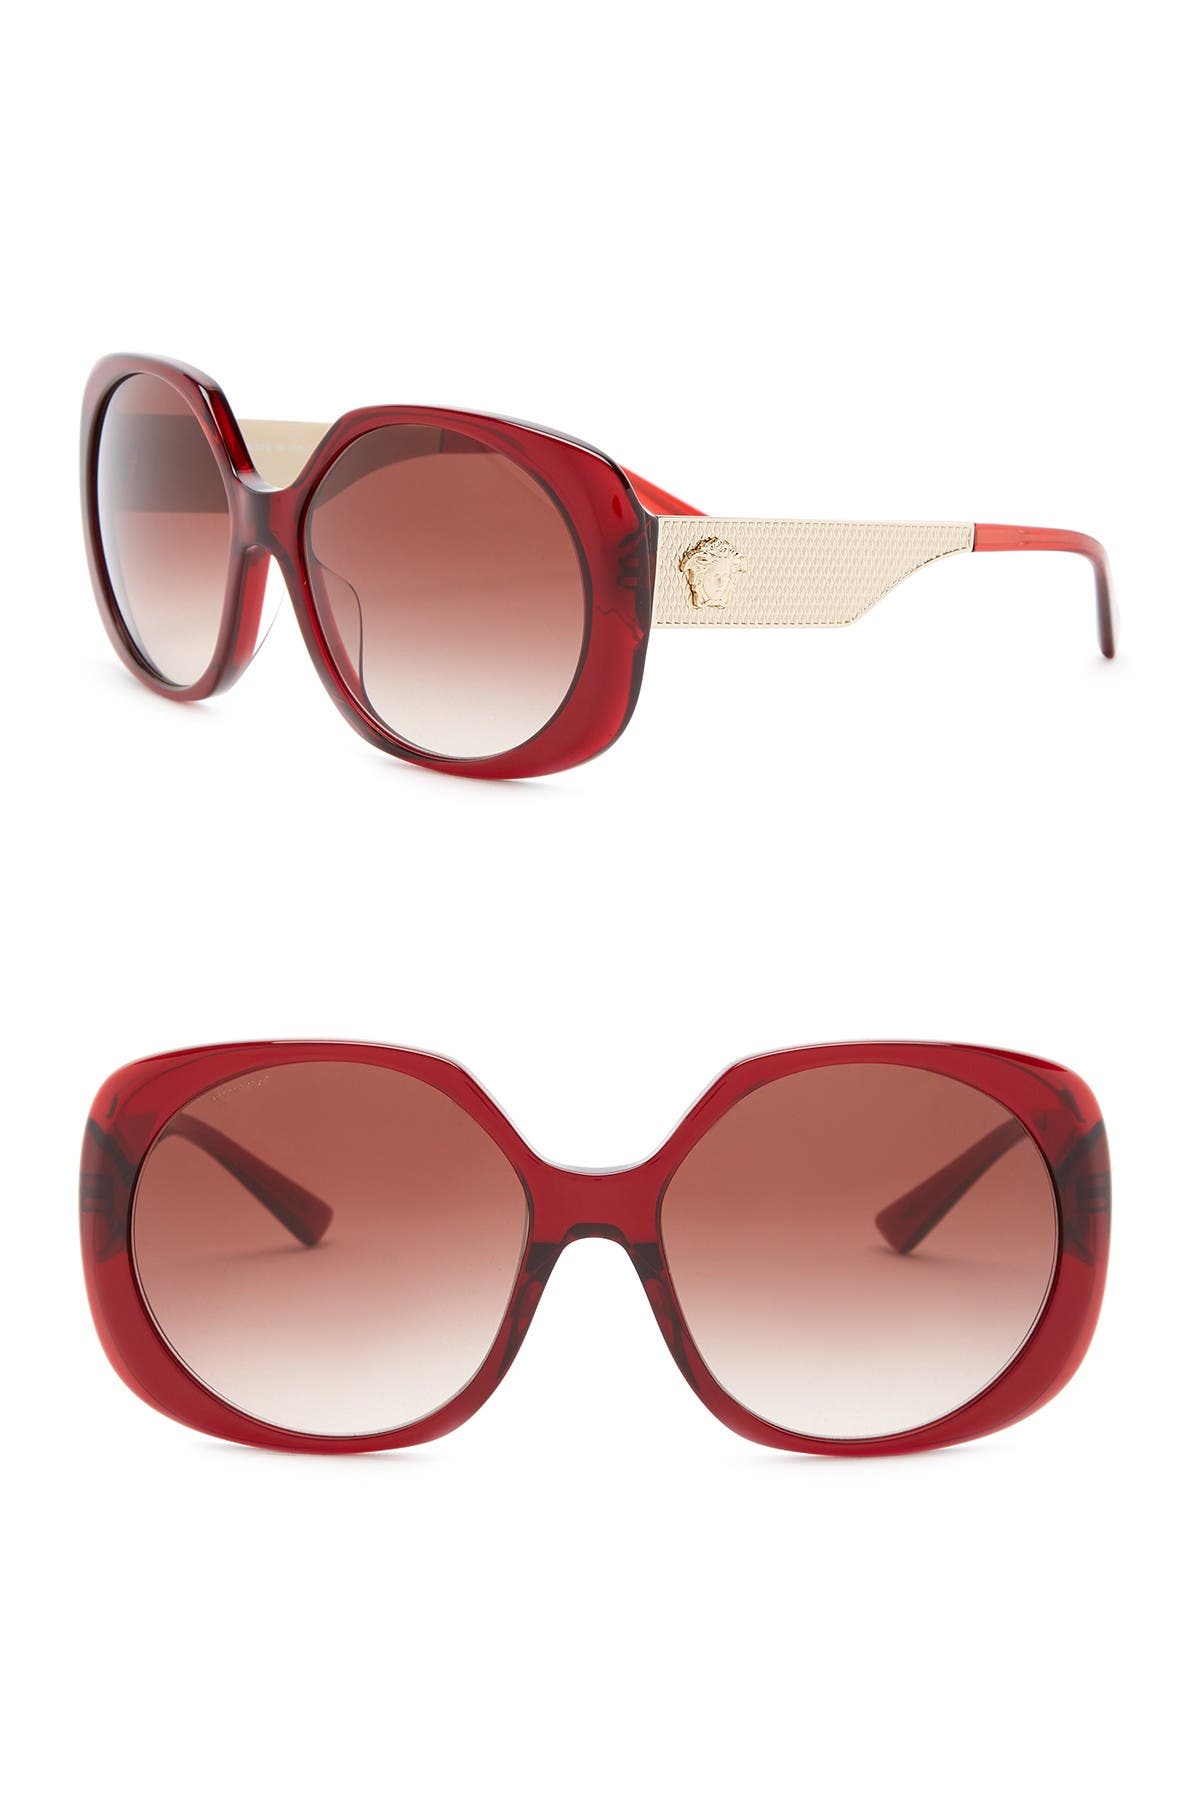 versace rock icon medusa sunglasses